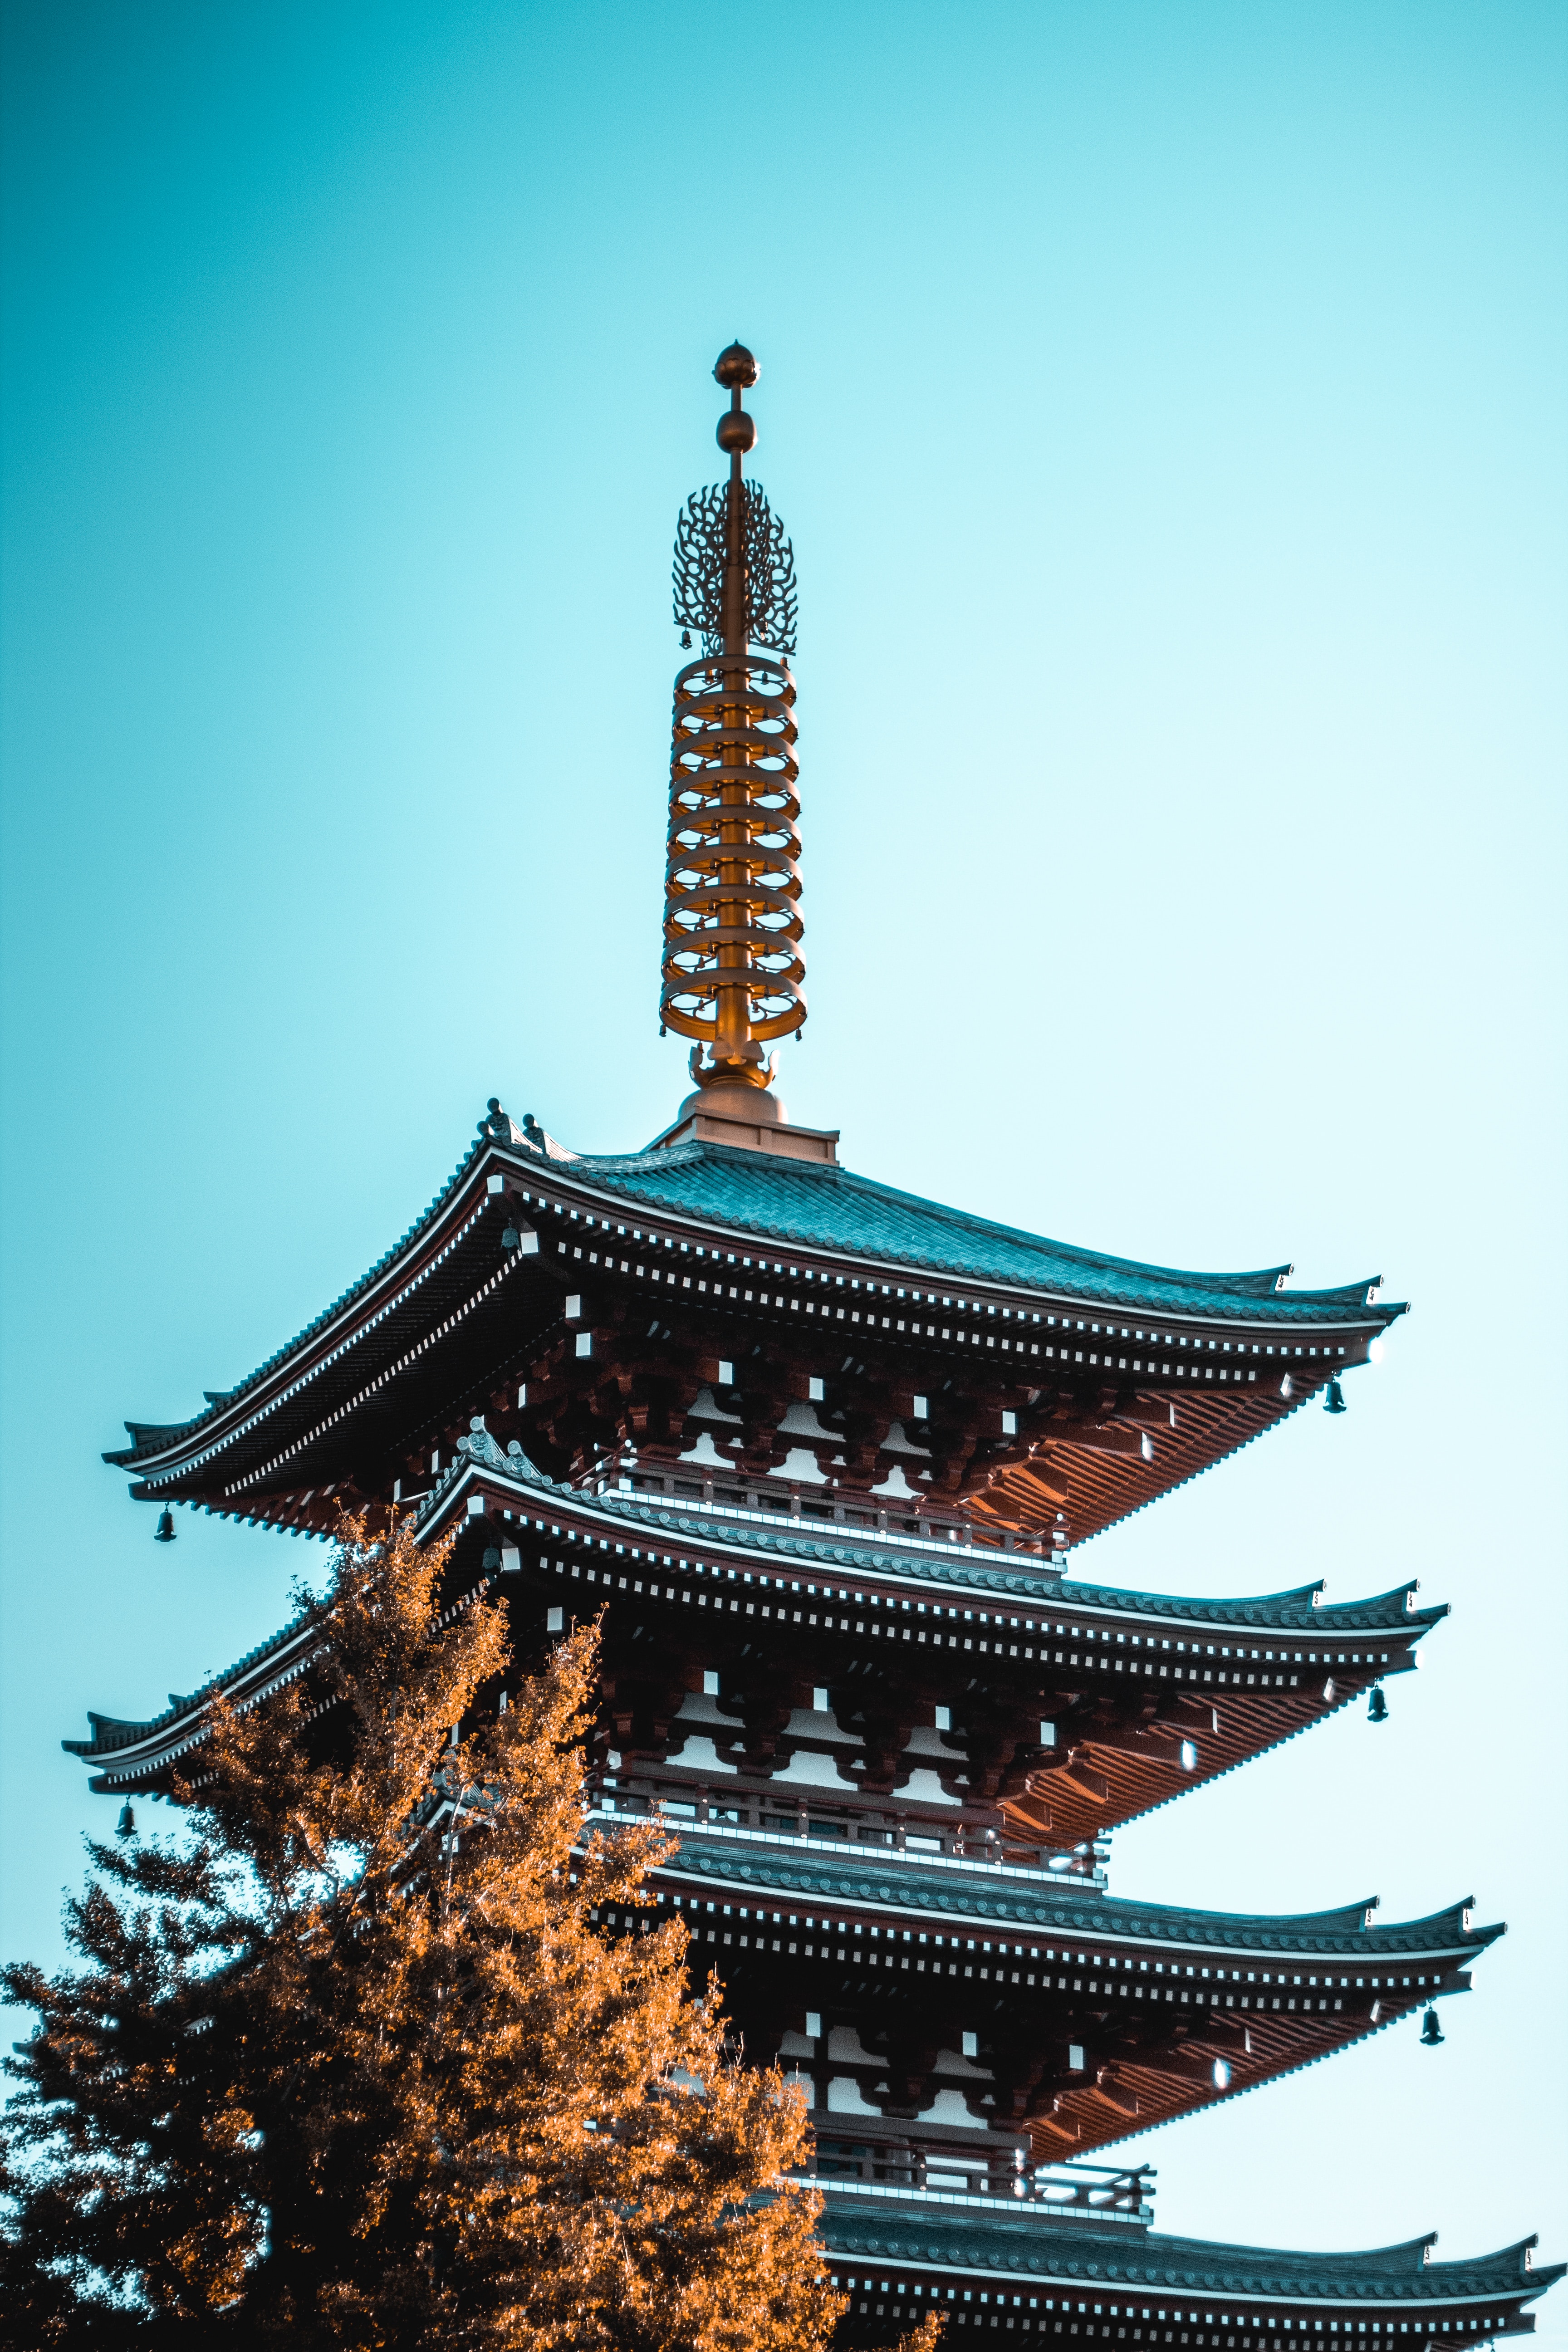 Popular Pagoda Image for Phone